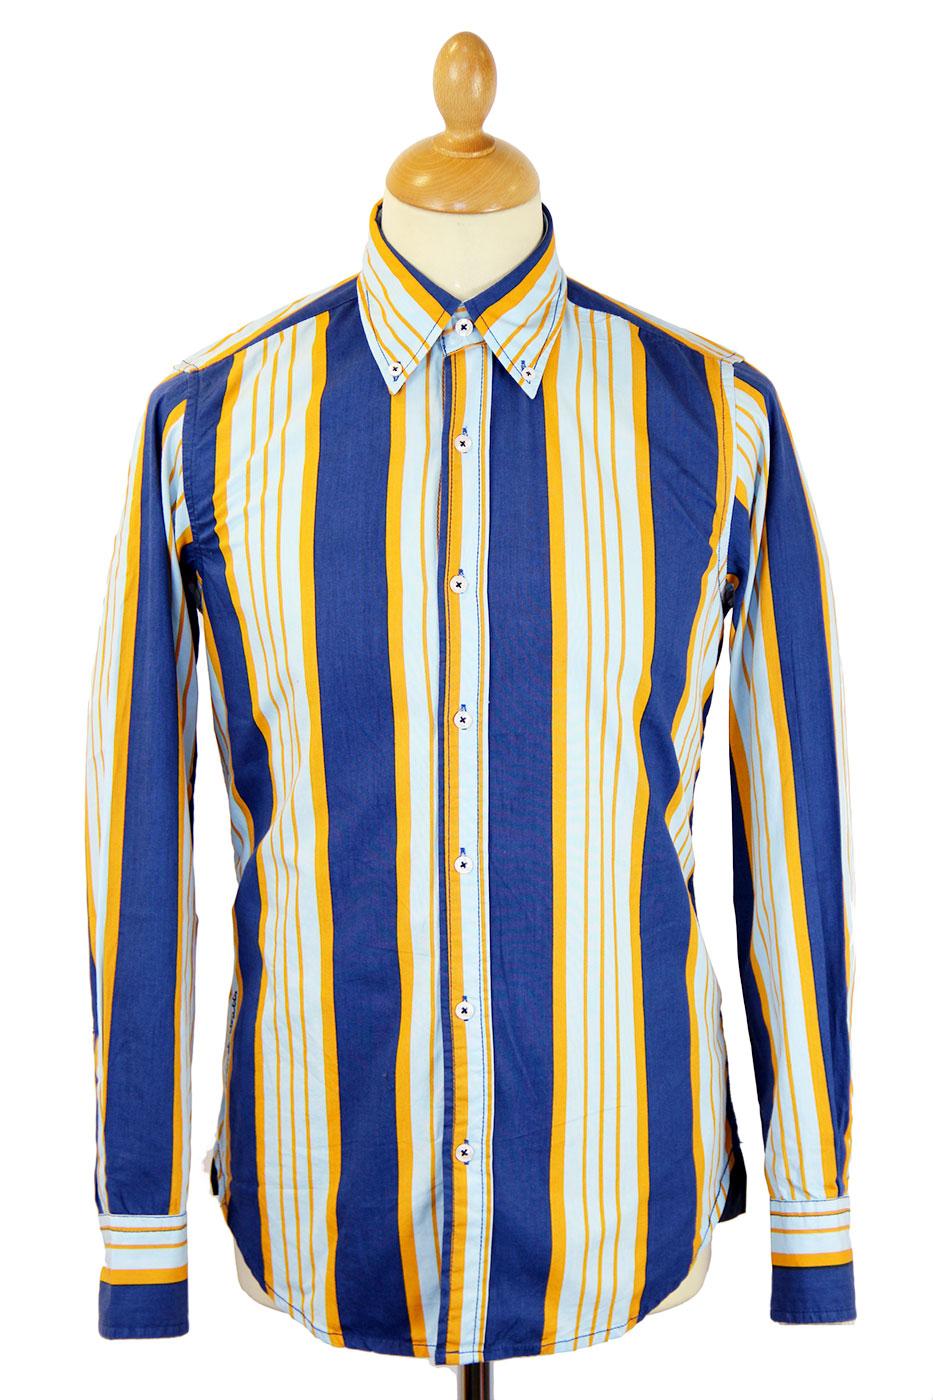 DAVID WATTS Bingley Retro Mod Multi Stripe Button Down Shirt